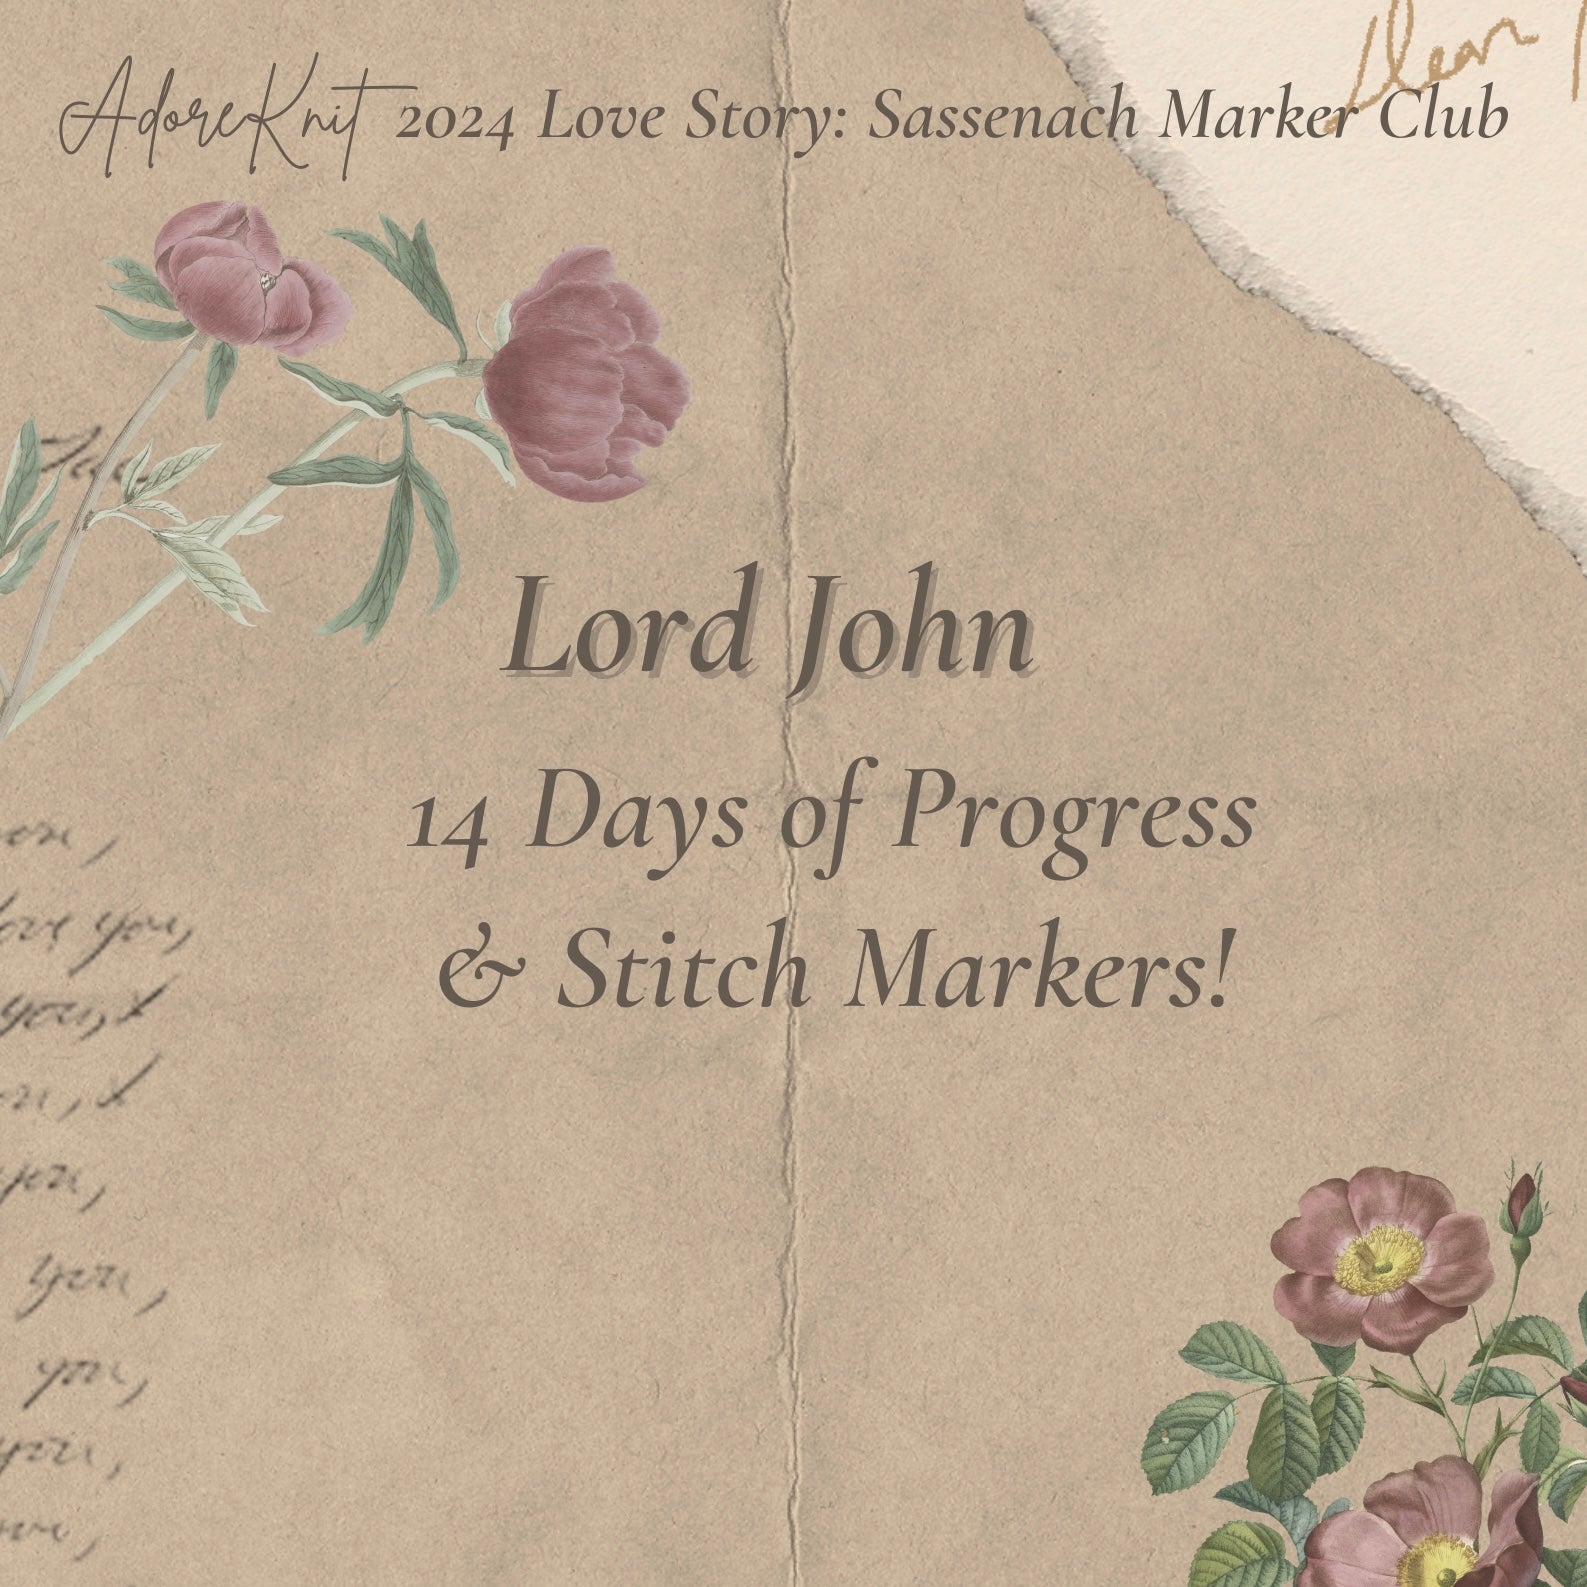 2024 Love Story: Sassanach Marker Club, 14 Days of Progress & Stitch Markers with a Project Bag - AdoreKnit